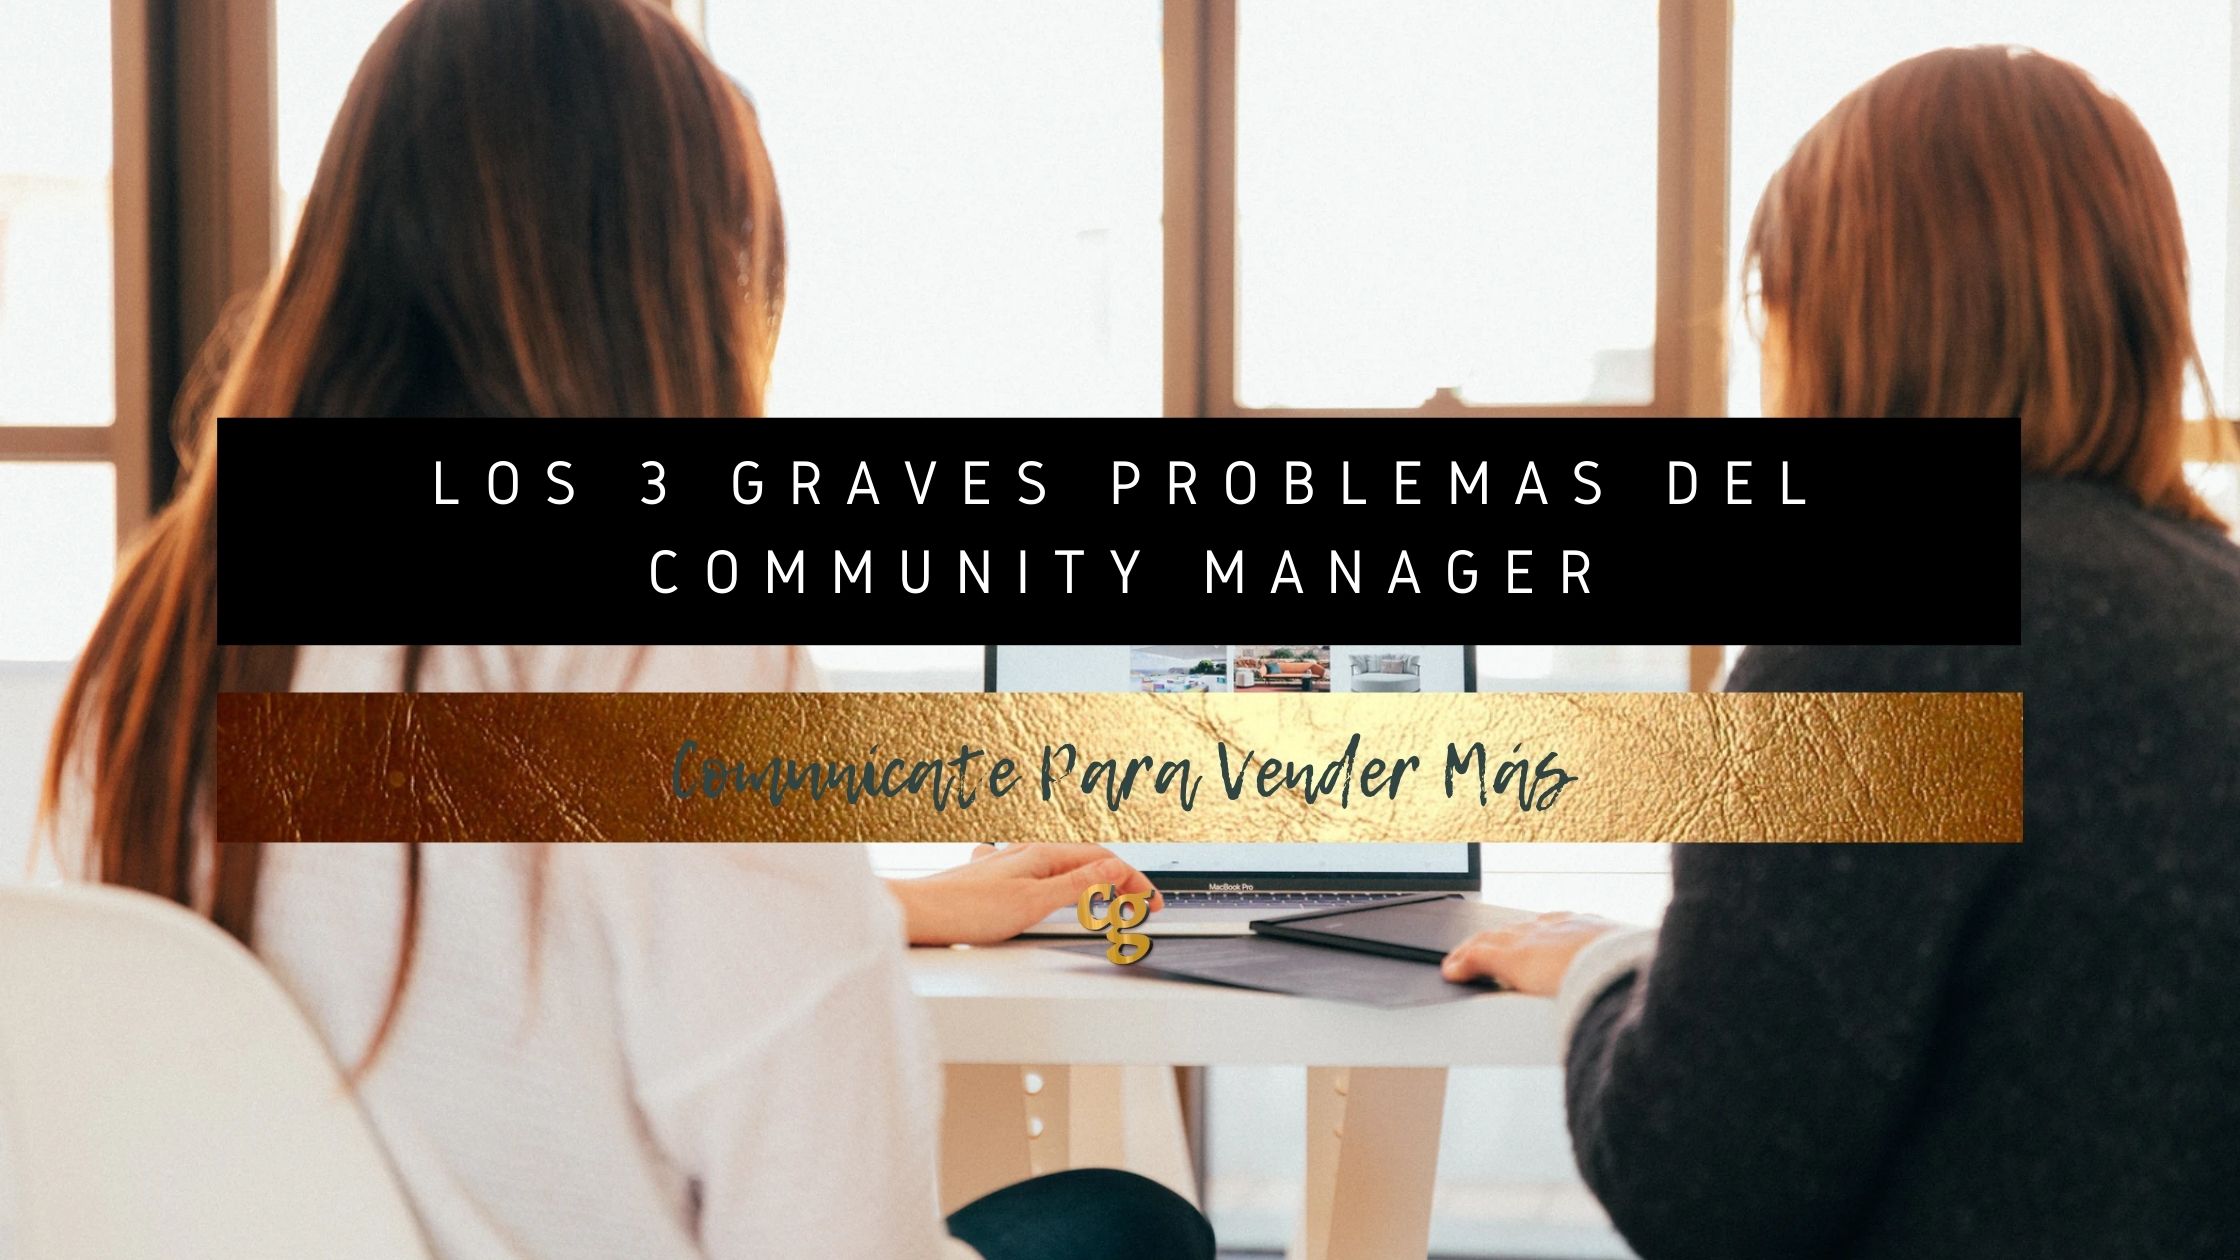 Los 3 graves problemas del Community Manager